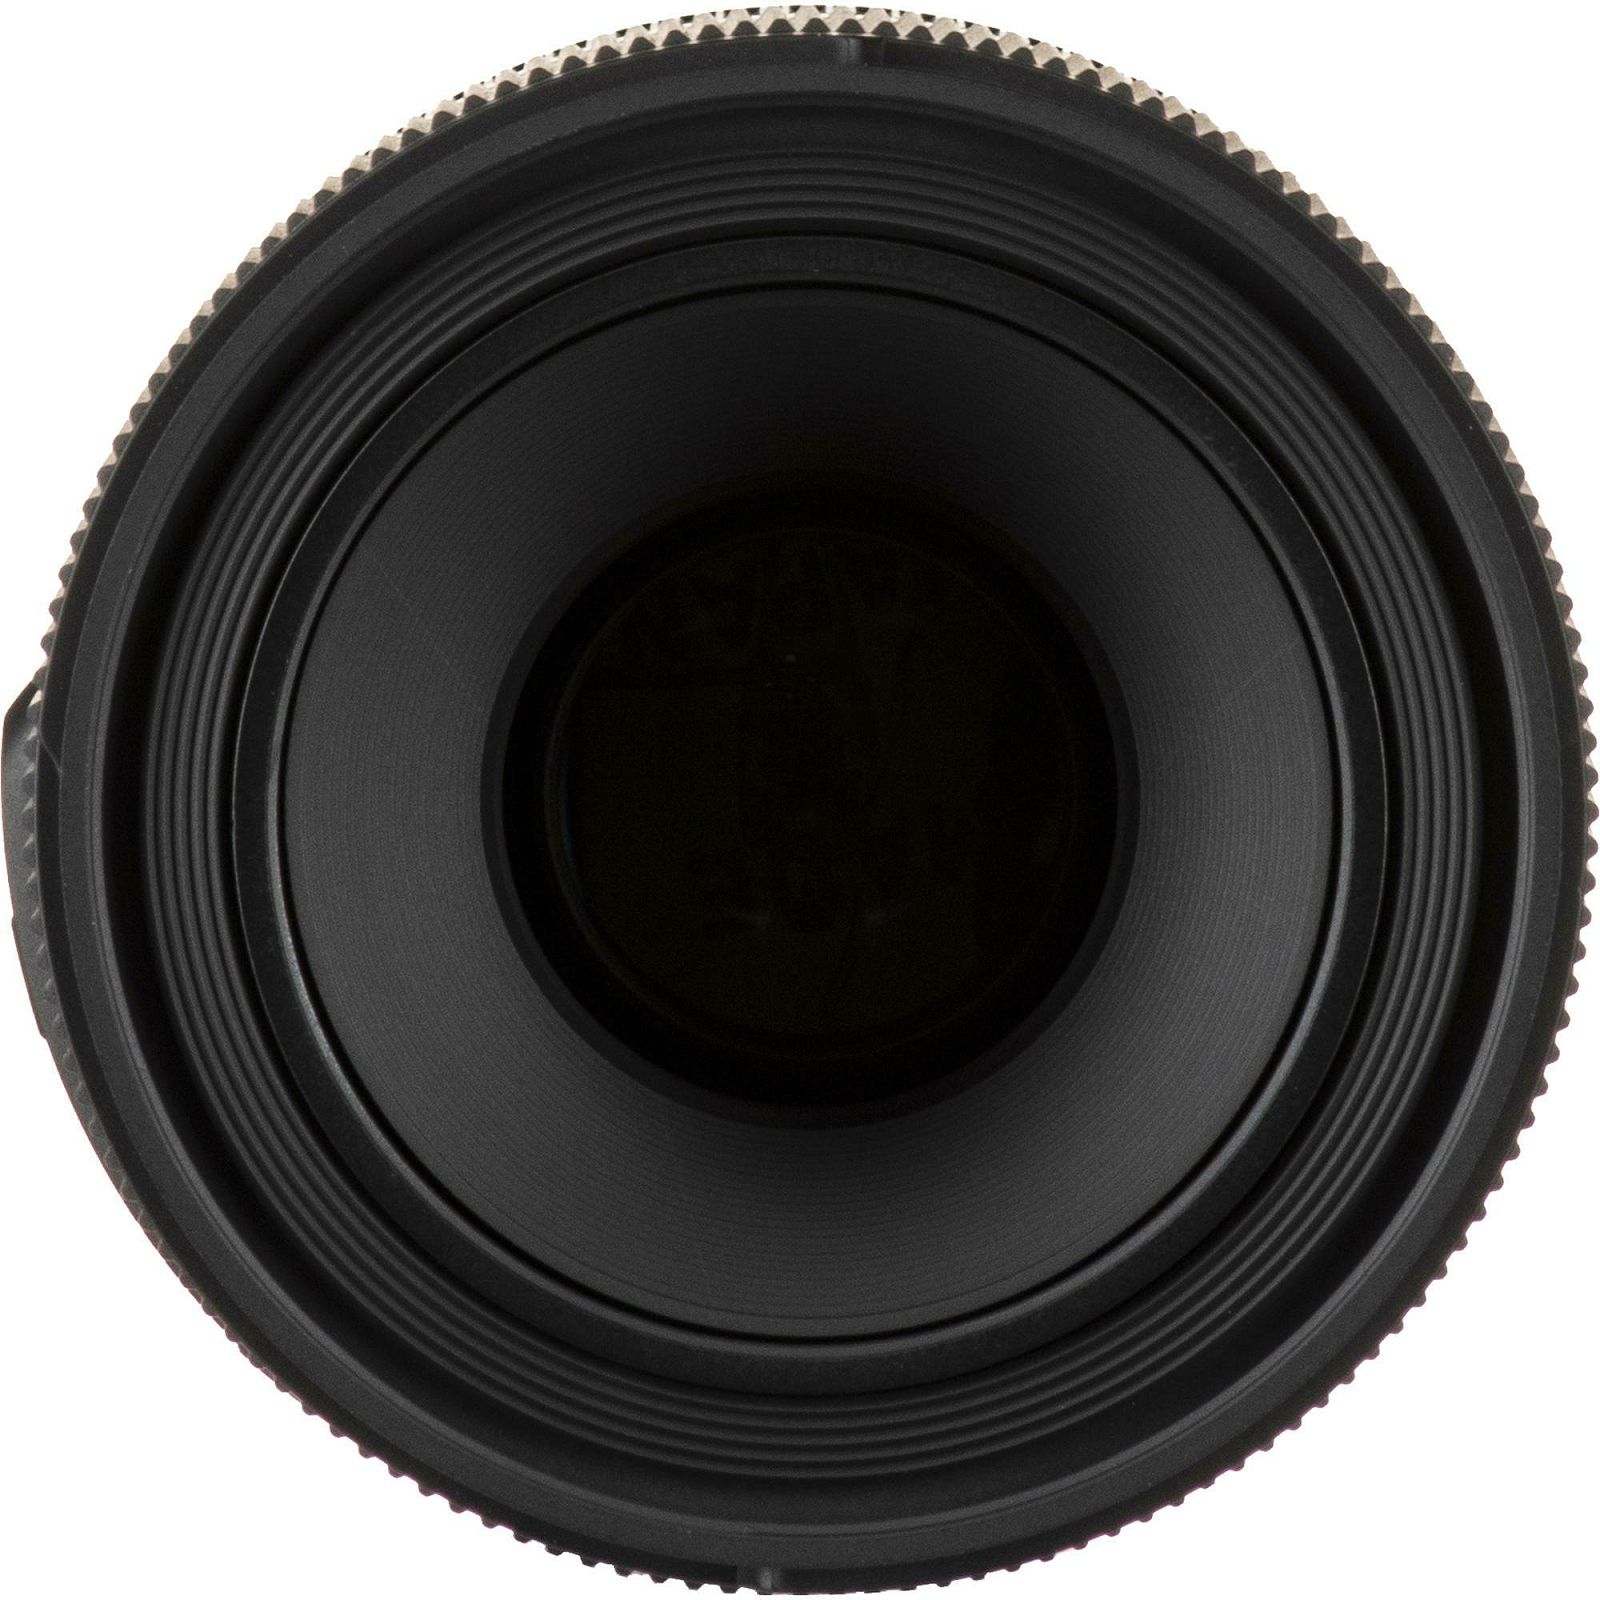 Sigma 70mm f/2.8 DG Macro ART objektiv za Canon EF